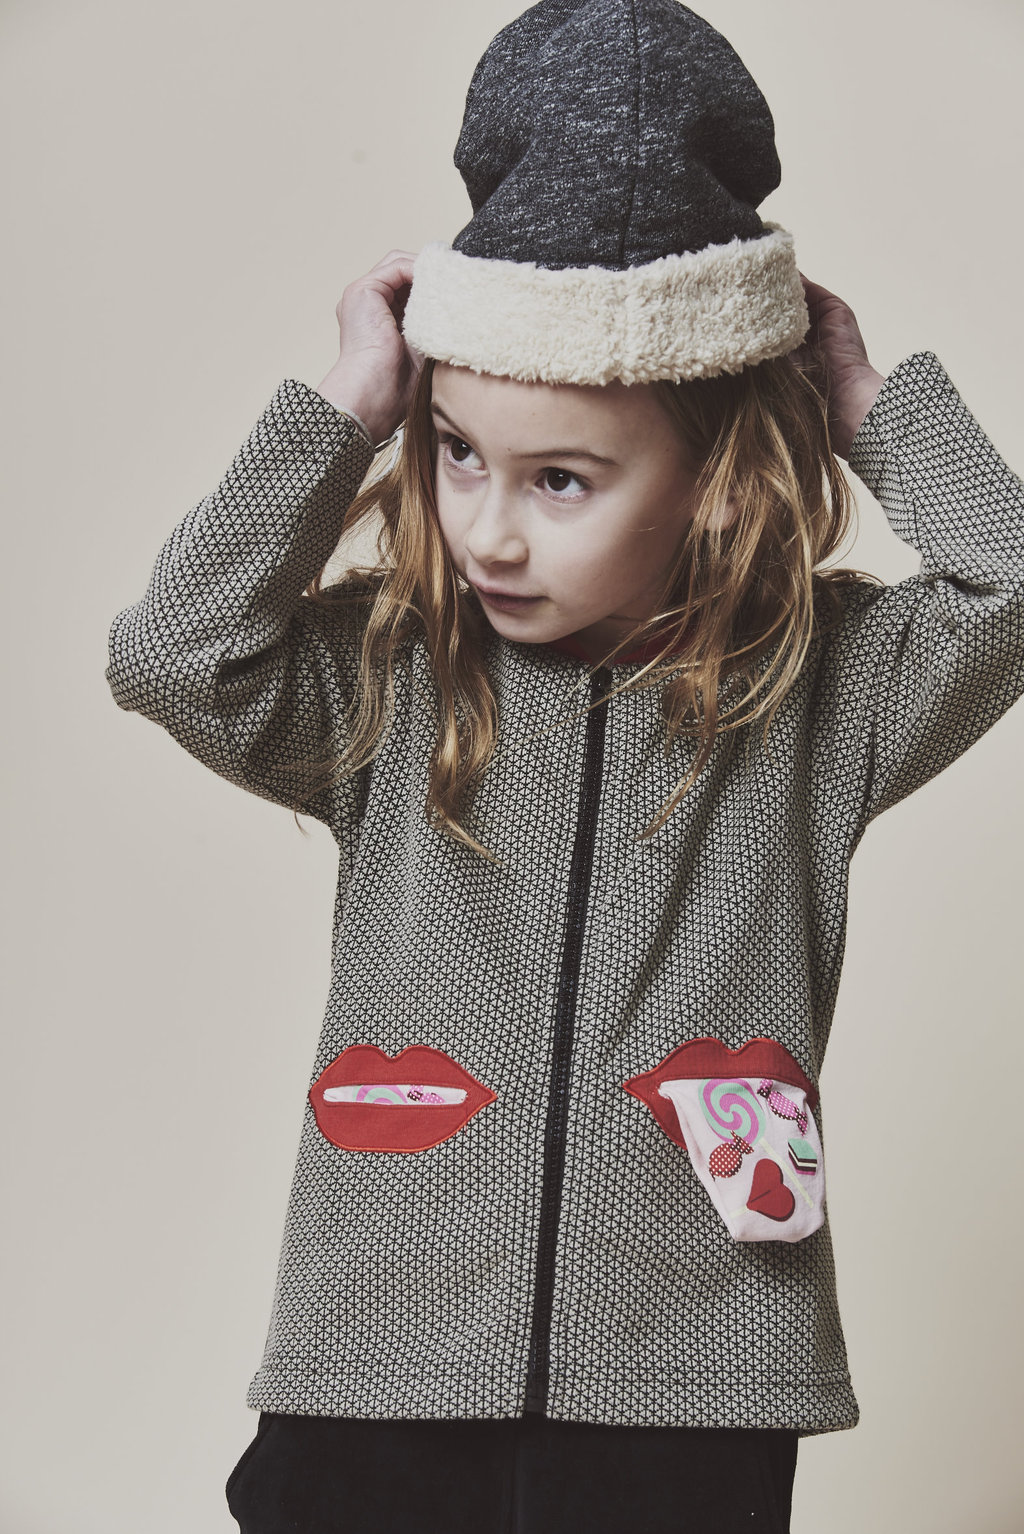 Third Eye Chic Fashion - kids fashion and lifestyle blog for the modern ...